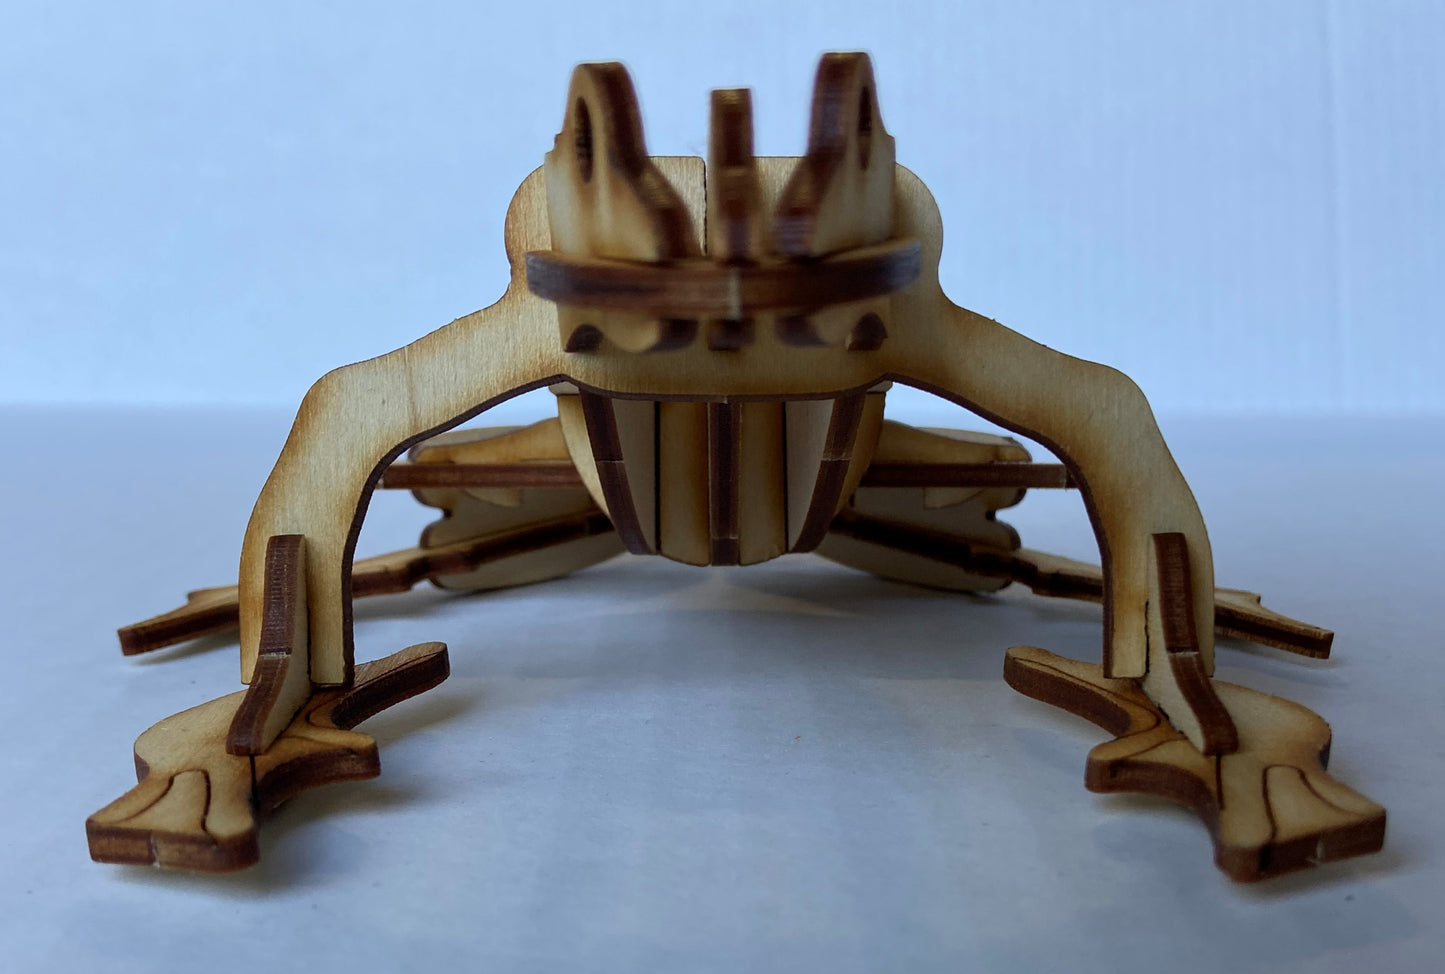 3D Frog DIY Wooden Puzzle